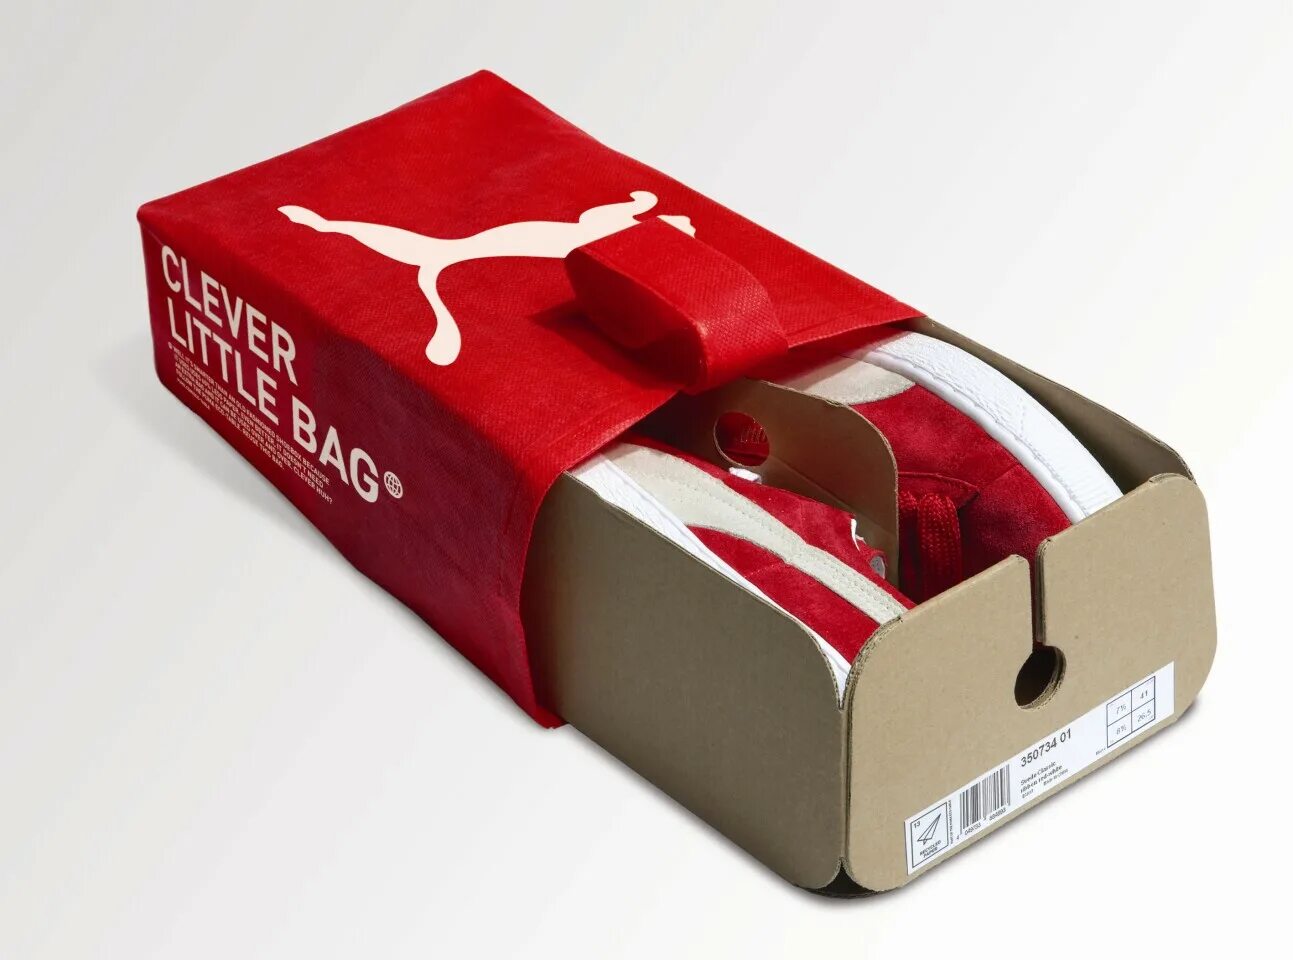 Clever little Bag Puma. Шубер обечайка. Креативная упаковка. Необычная упаковка. Дизайн новой упаковки